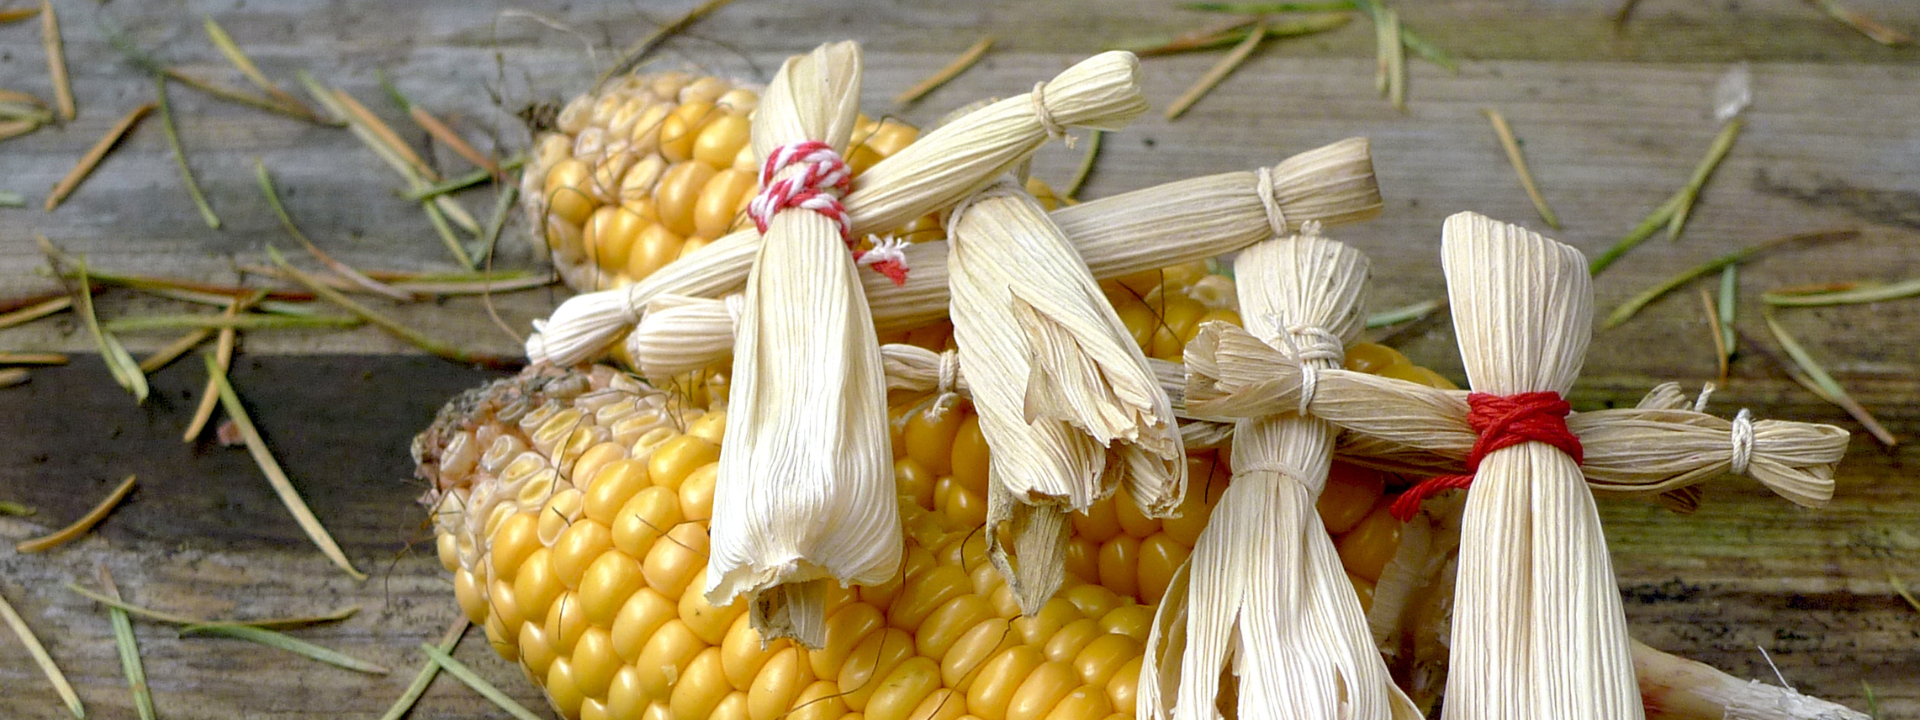 corn husk dolls on top of corn